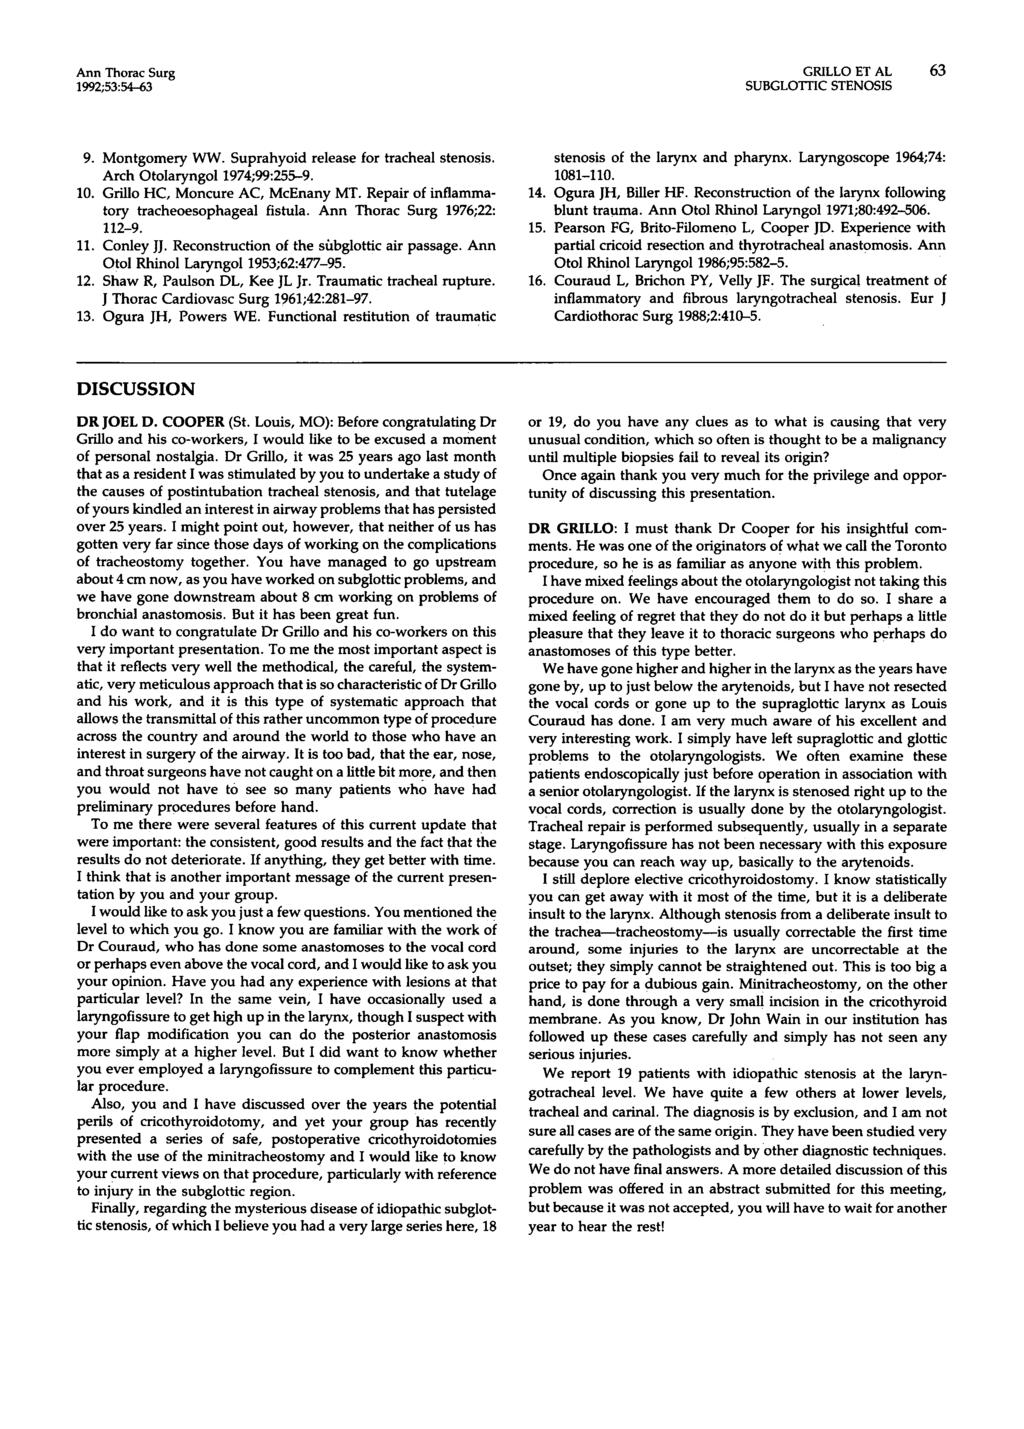 nn Thorac Surg 1992;5354-63 GRILLOETL 63 SUGLOTIC STENOSIS 9. Montgomery WW. Suprahyoid release for tracheal stenosis. rch Otolaryngol 1974;99:255-9. 10. Grillo HC, Moncure C, McEnany MT.